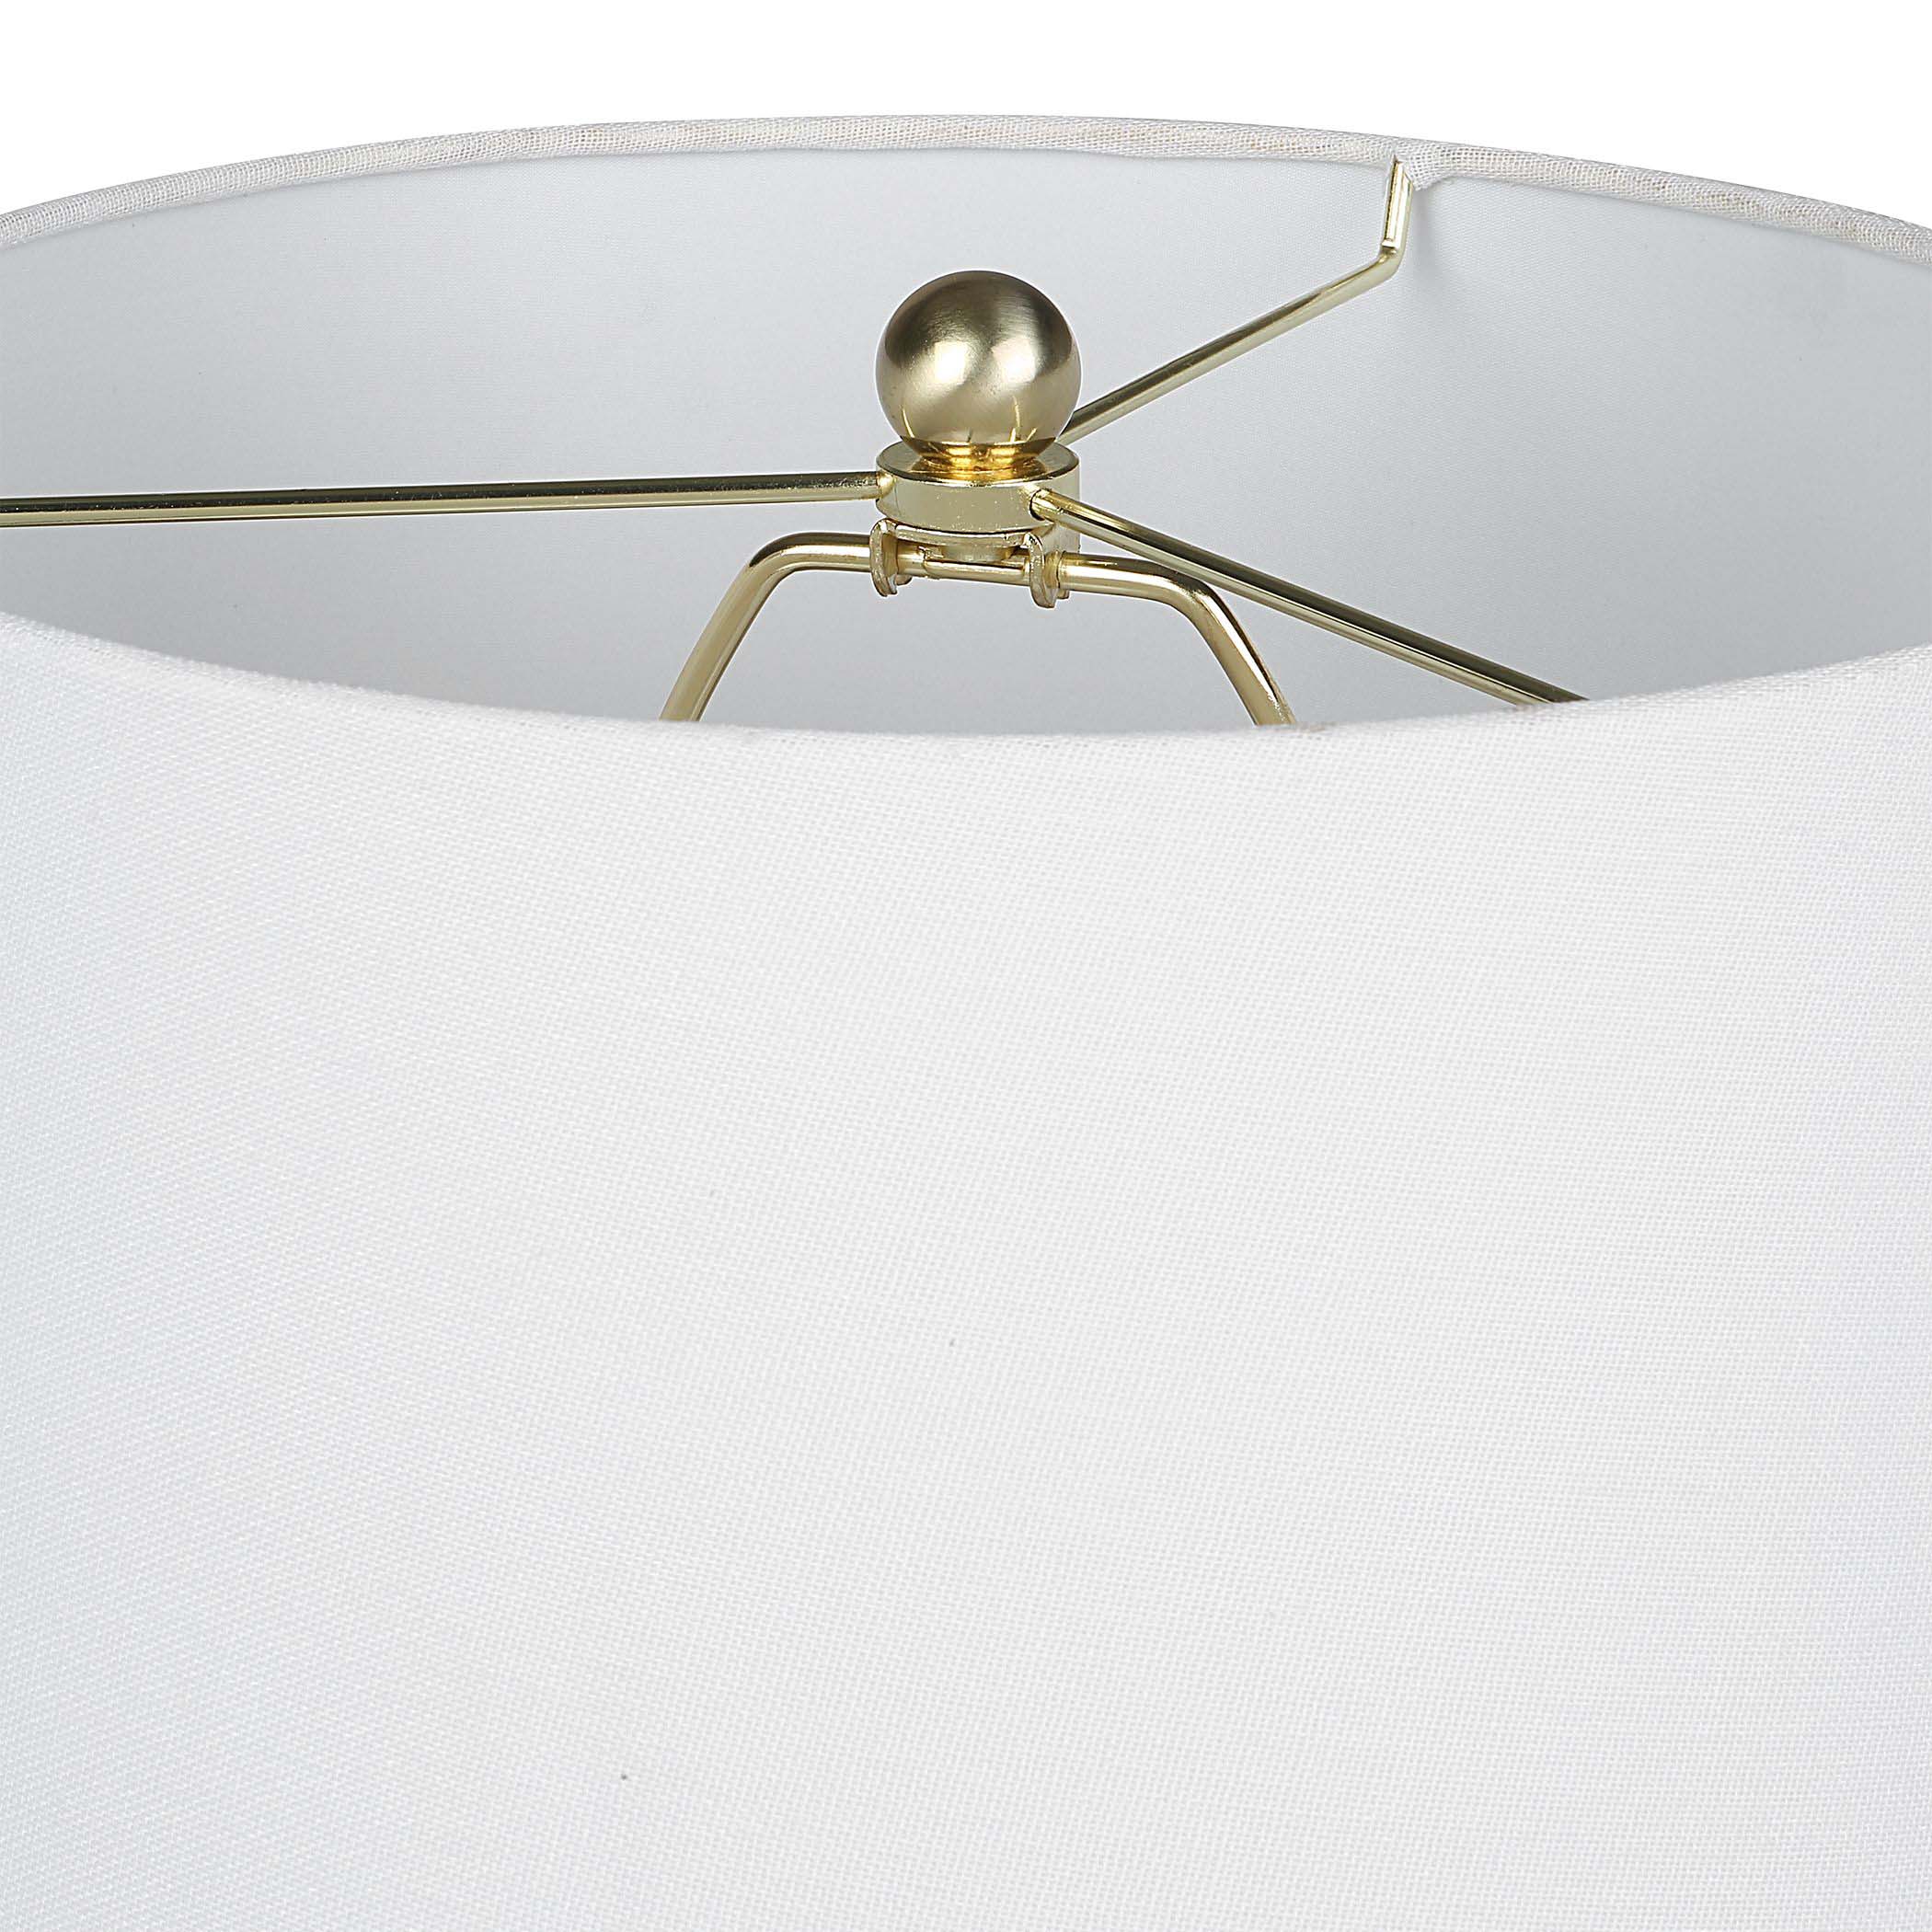 Decor Market White Ceramic & Round Base Table Lamp